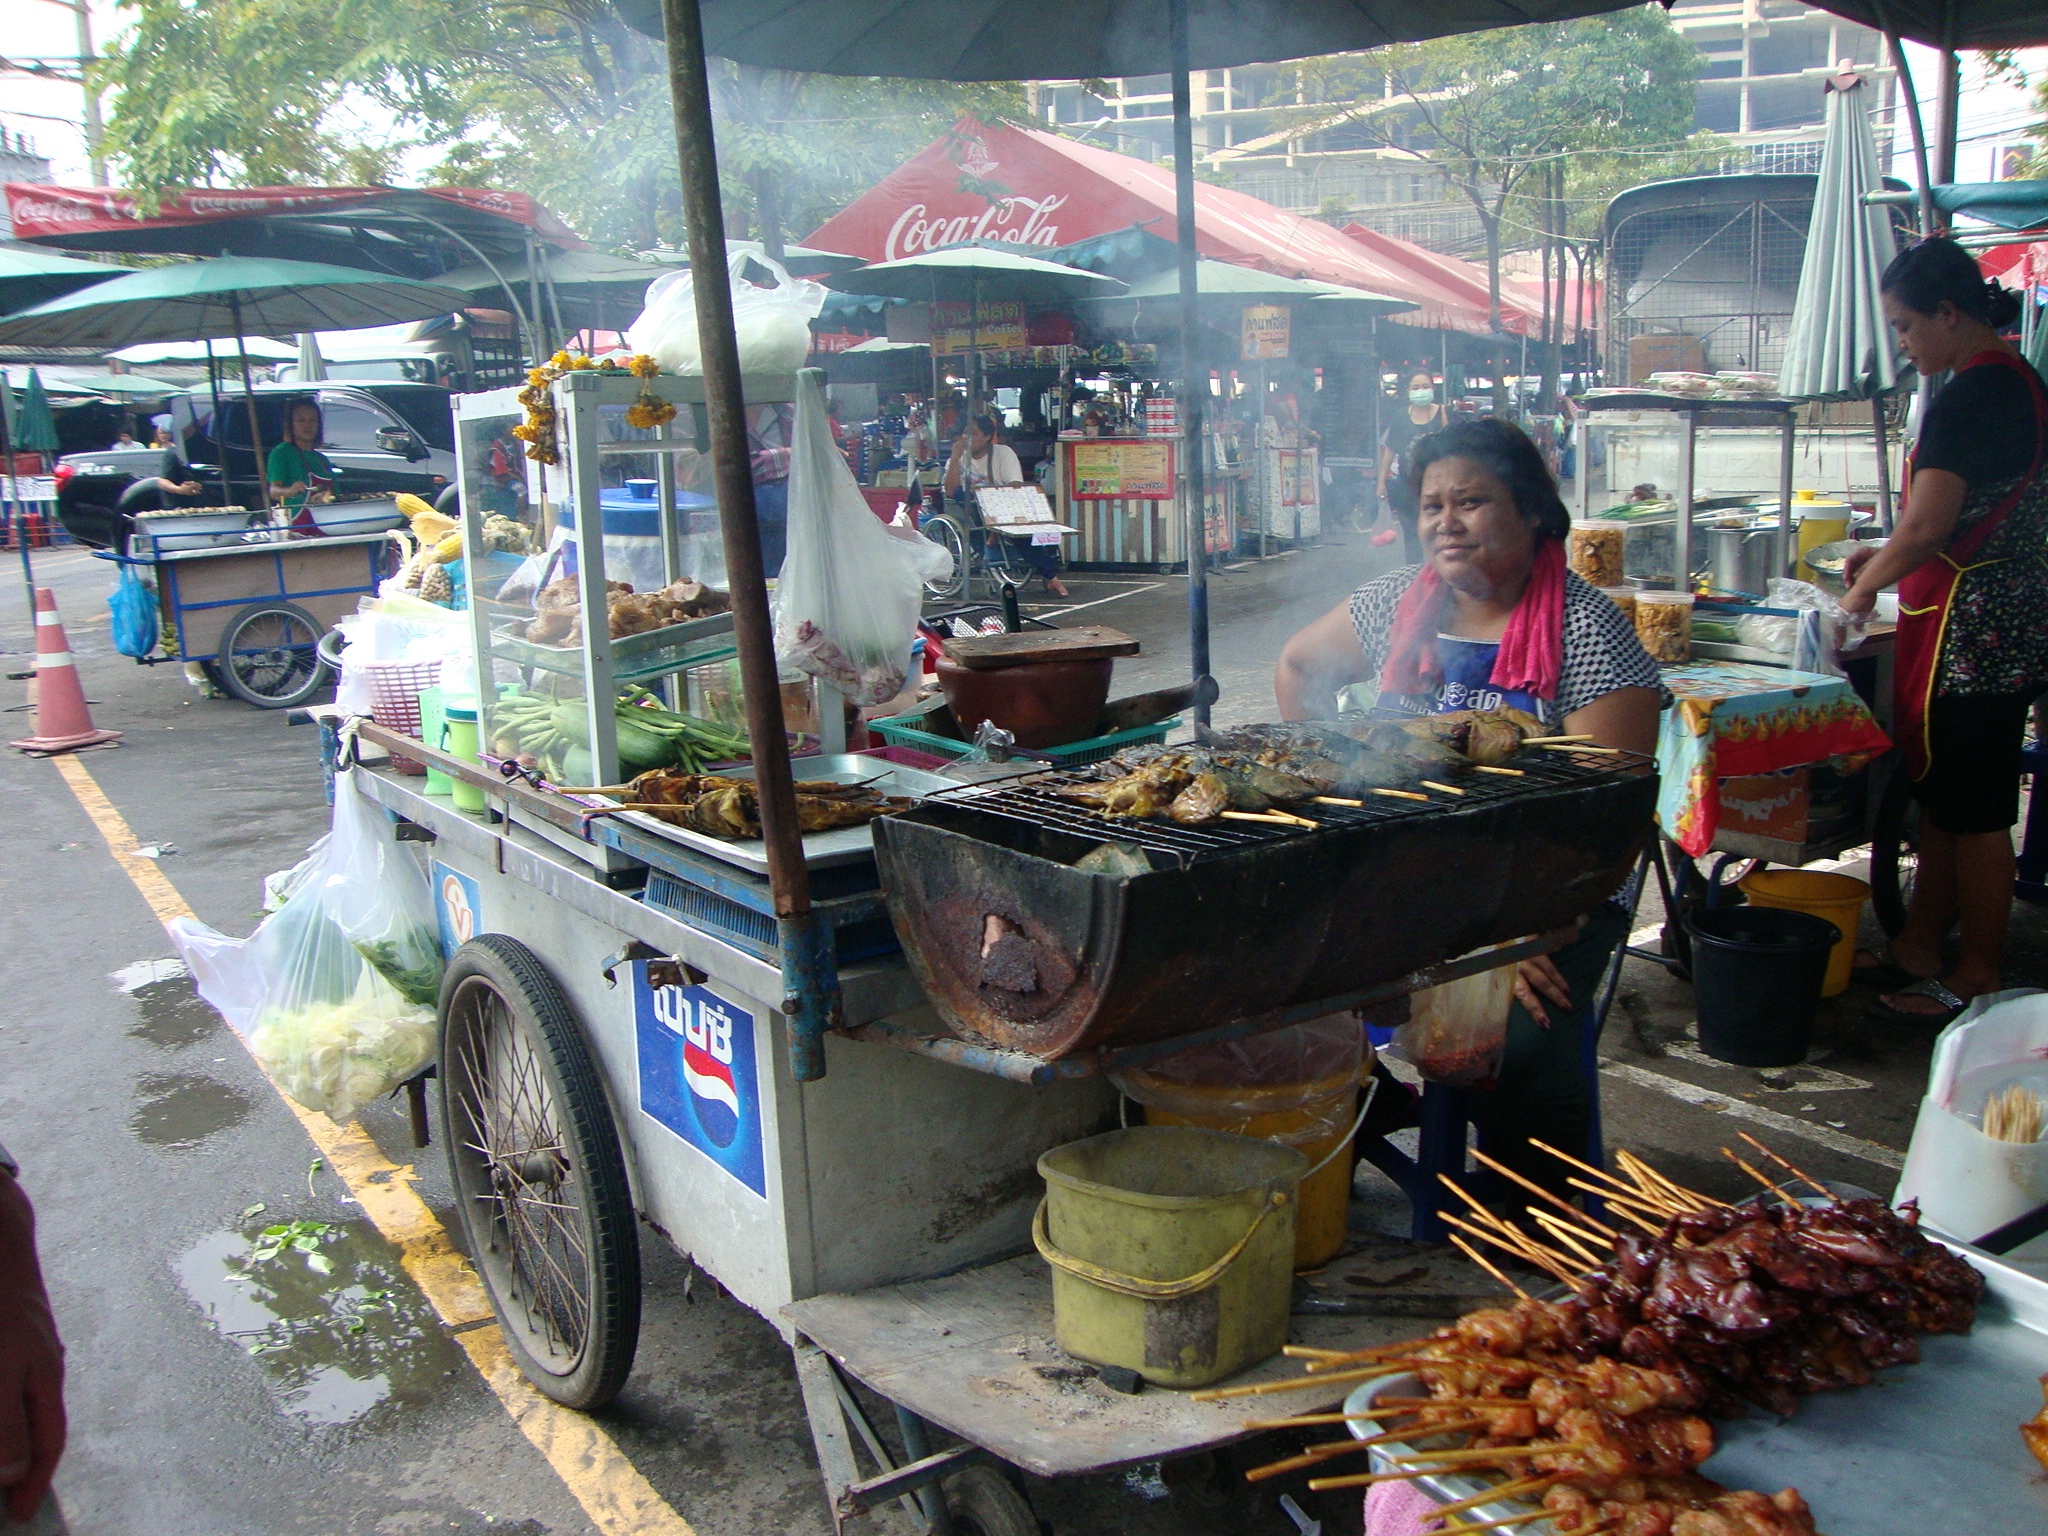 A street food cart in Thailand